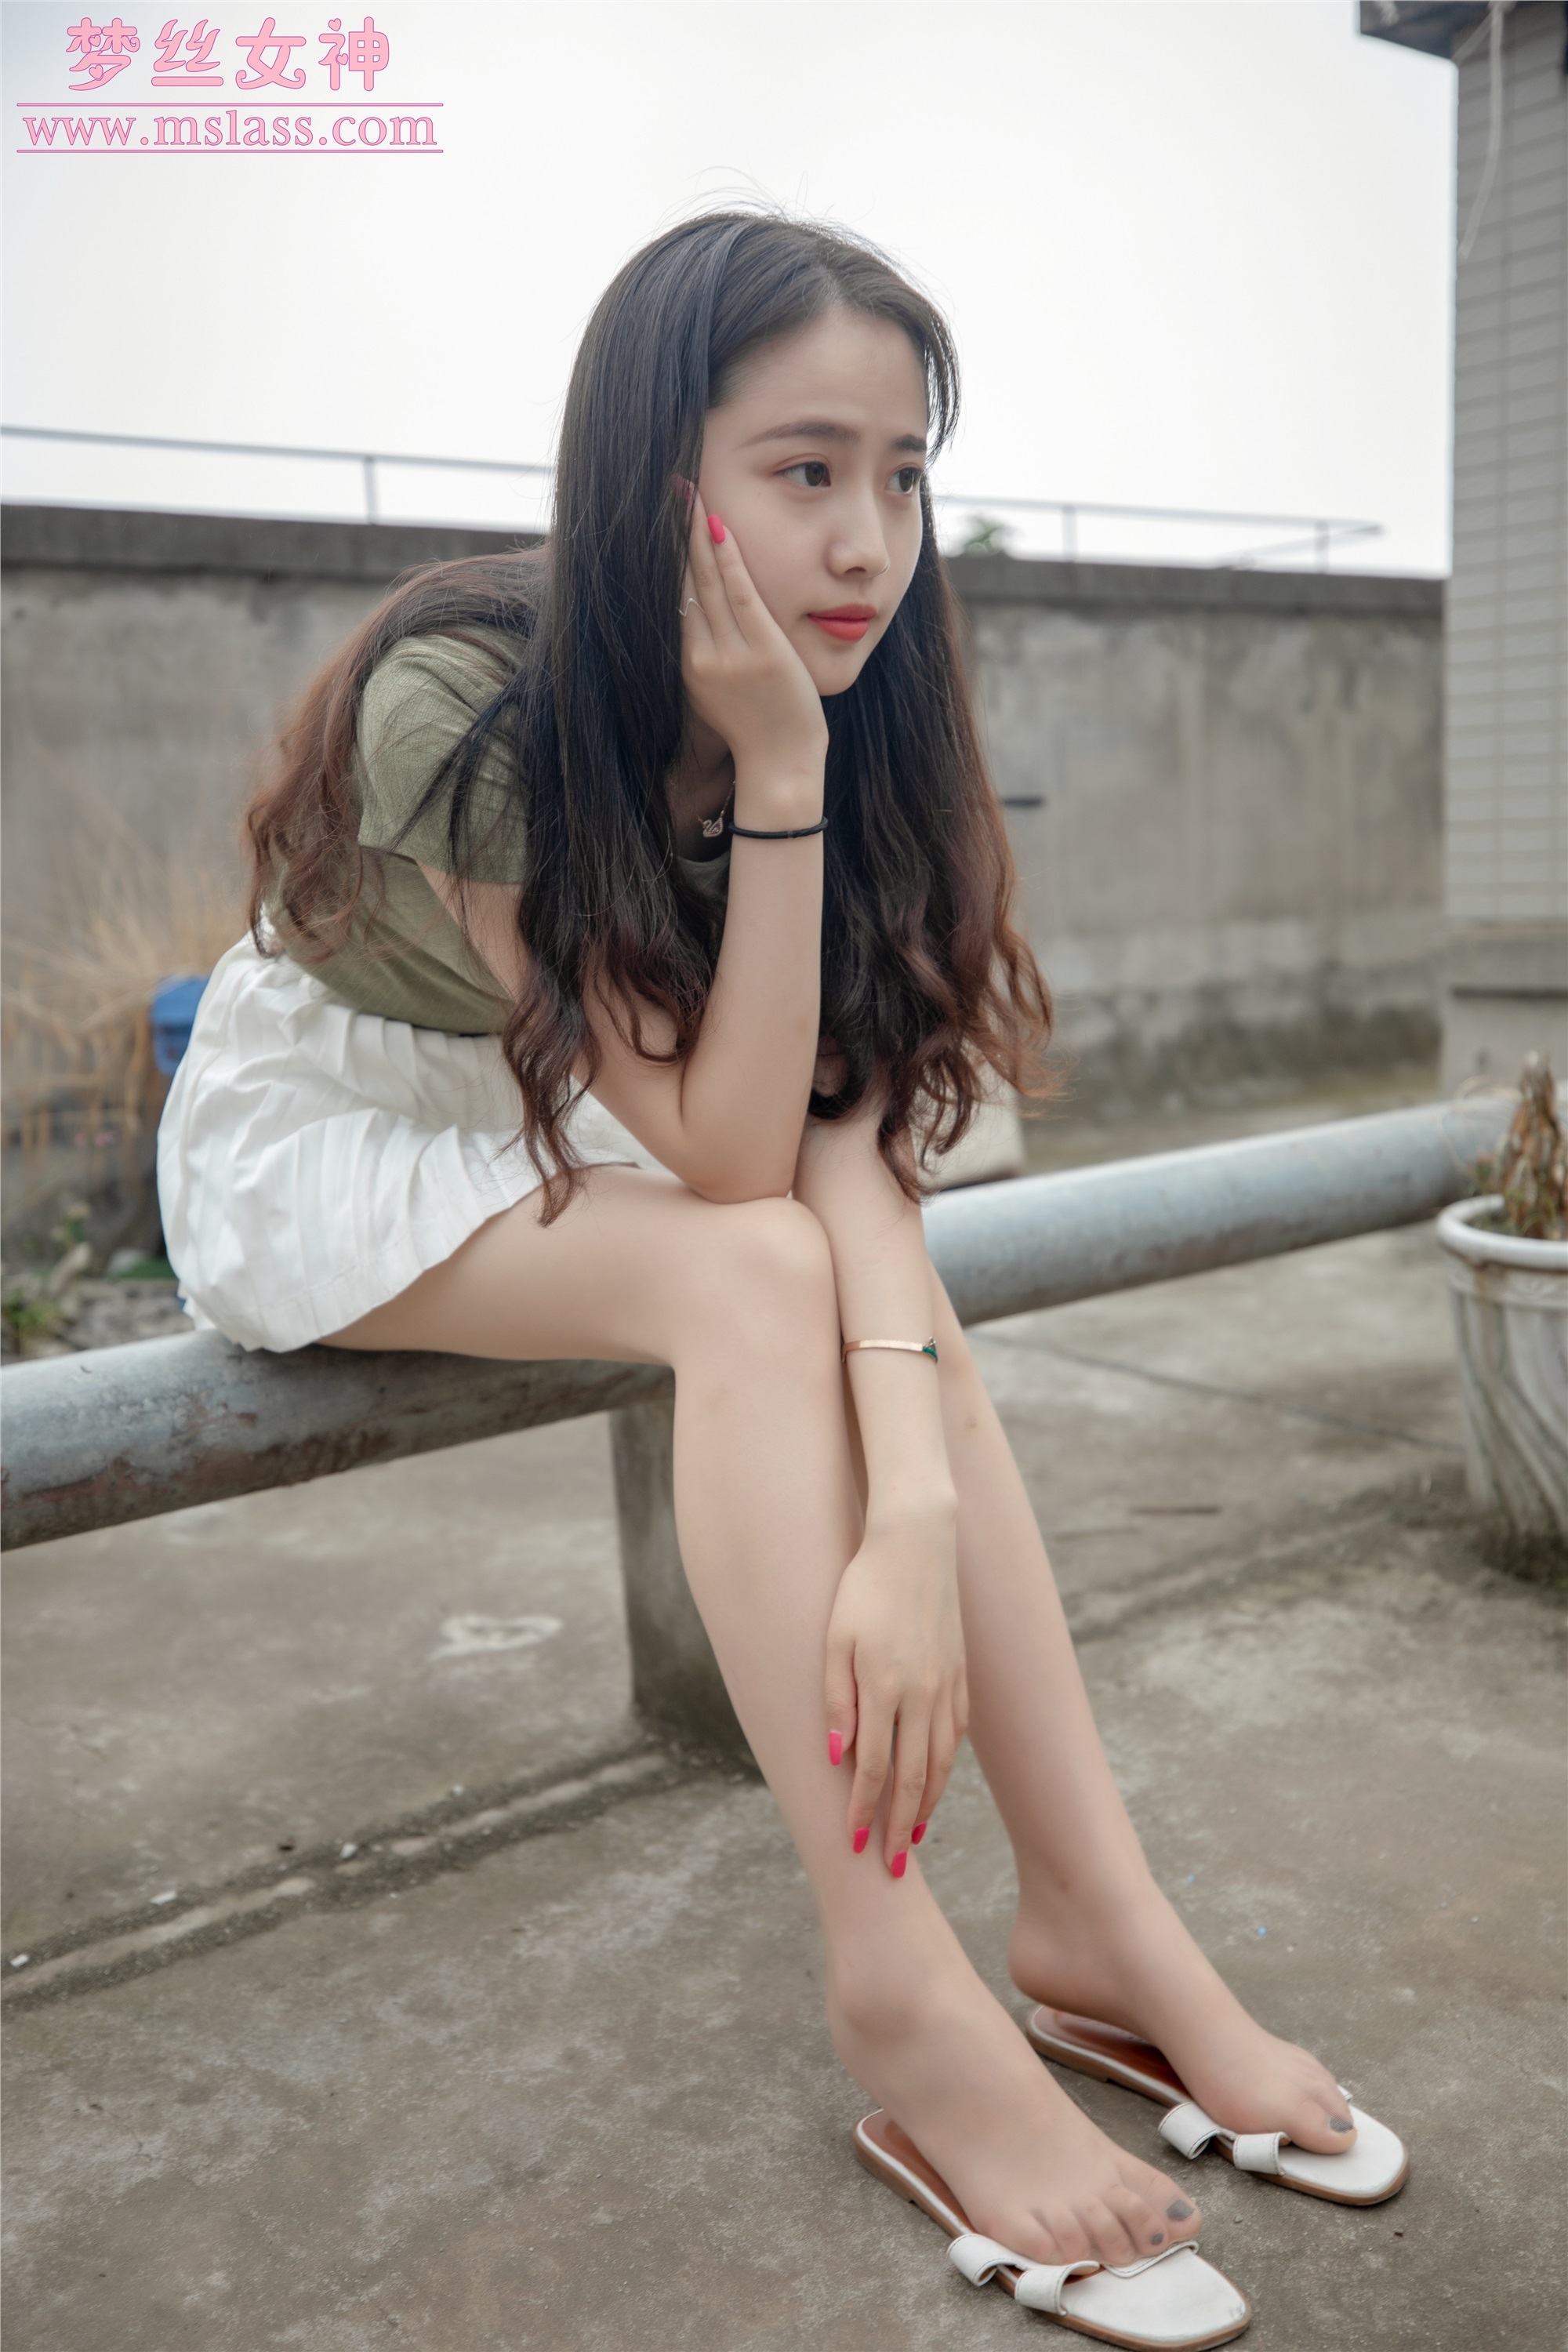 MSLASS梦丝女神2019-06-20 柳儿 侧颜太美的小姐姐 套图